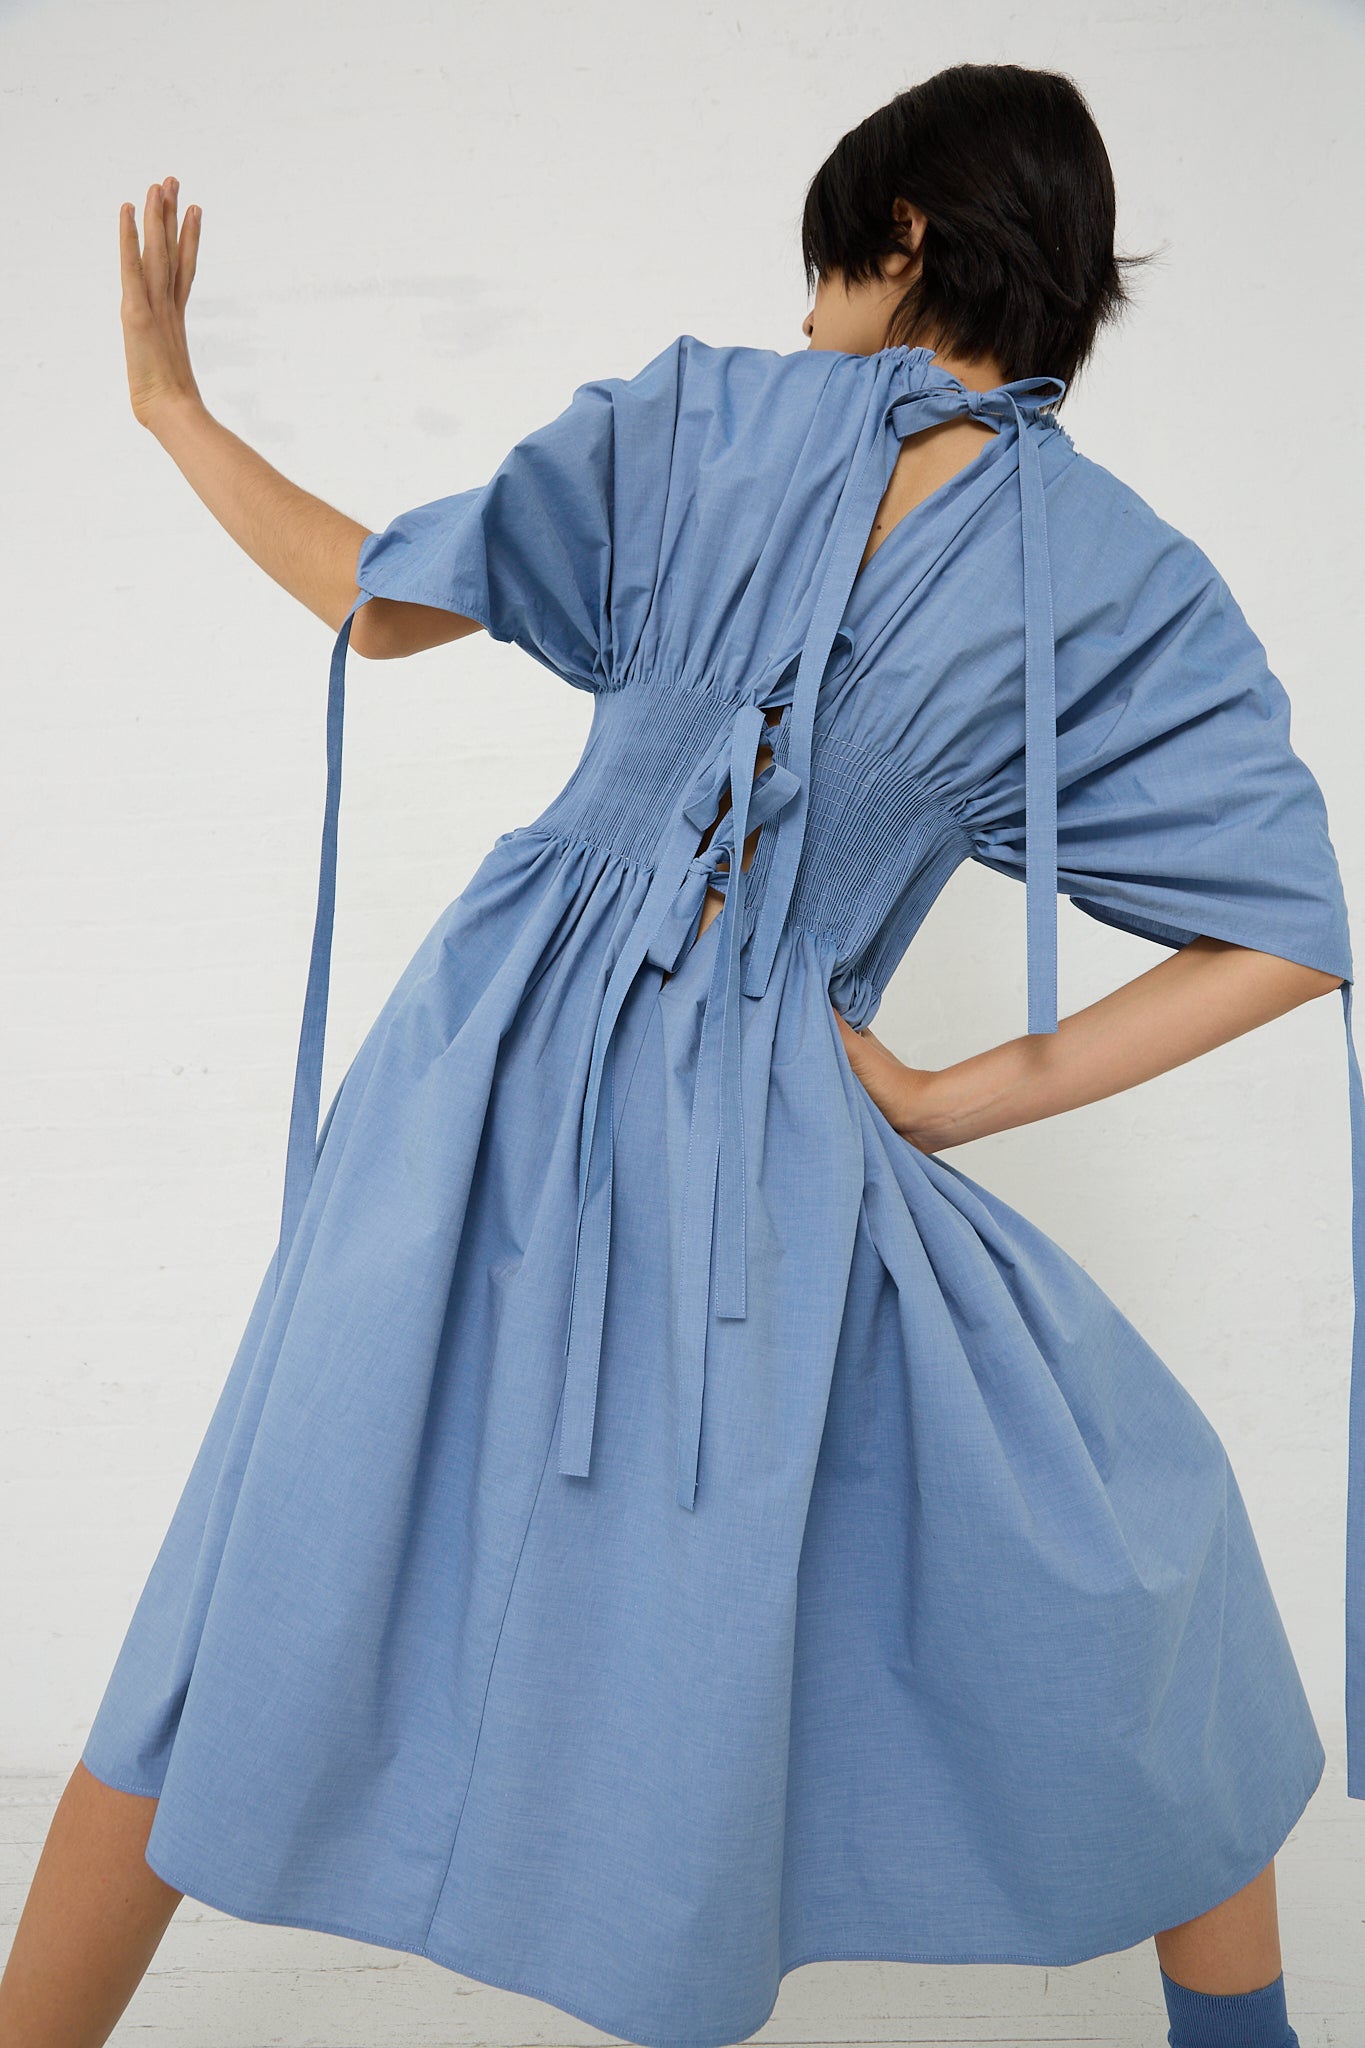 A woman in a Renata Brenha Cotton Sanfona Dress in Denim Blue is posing.